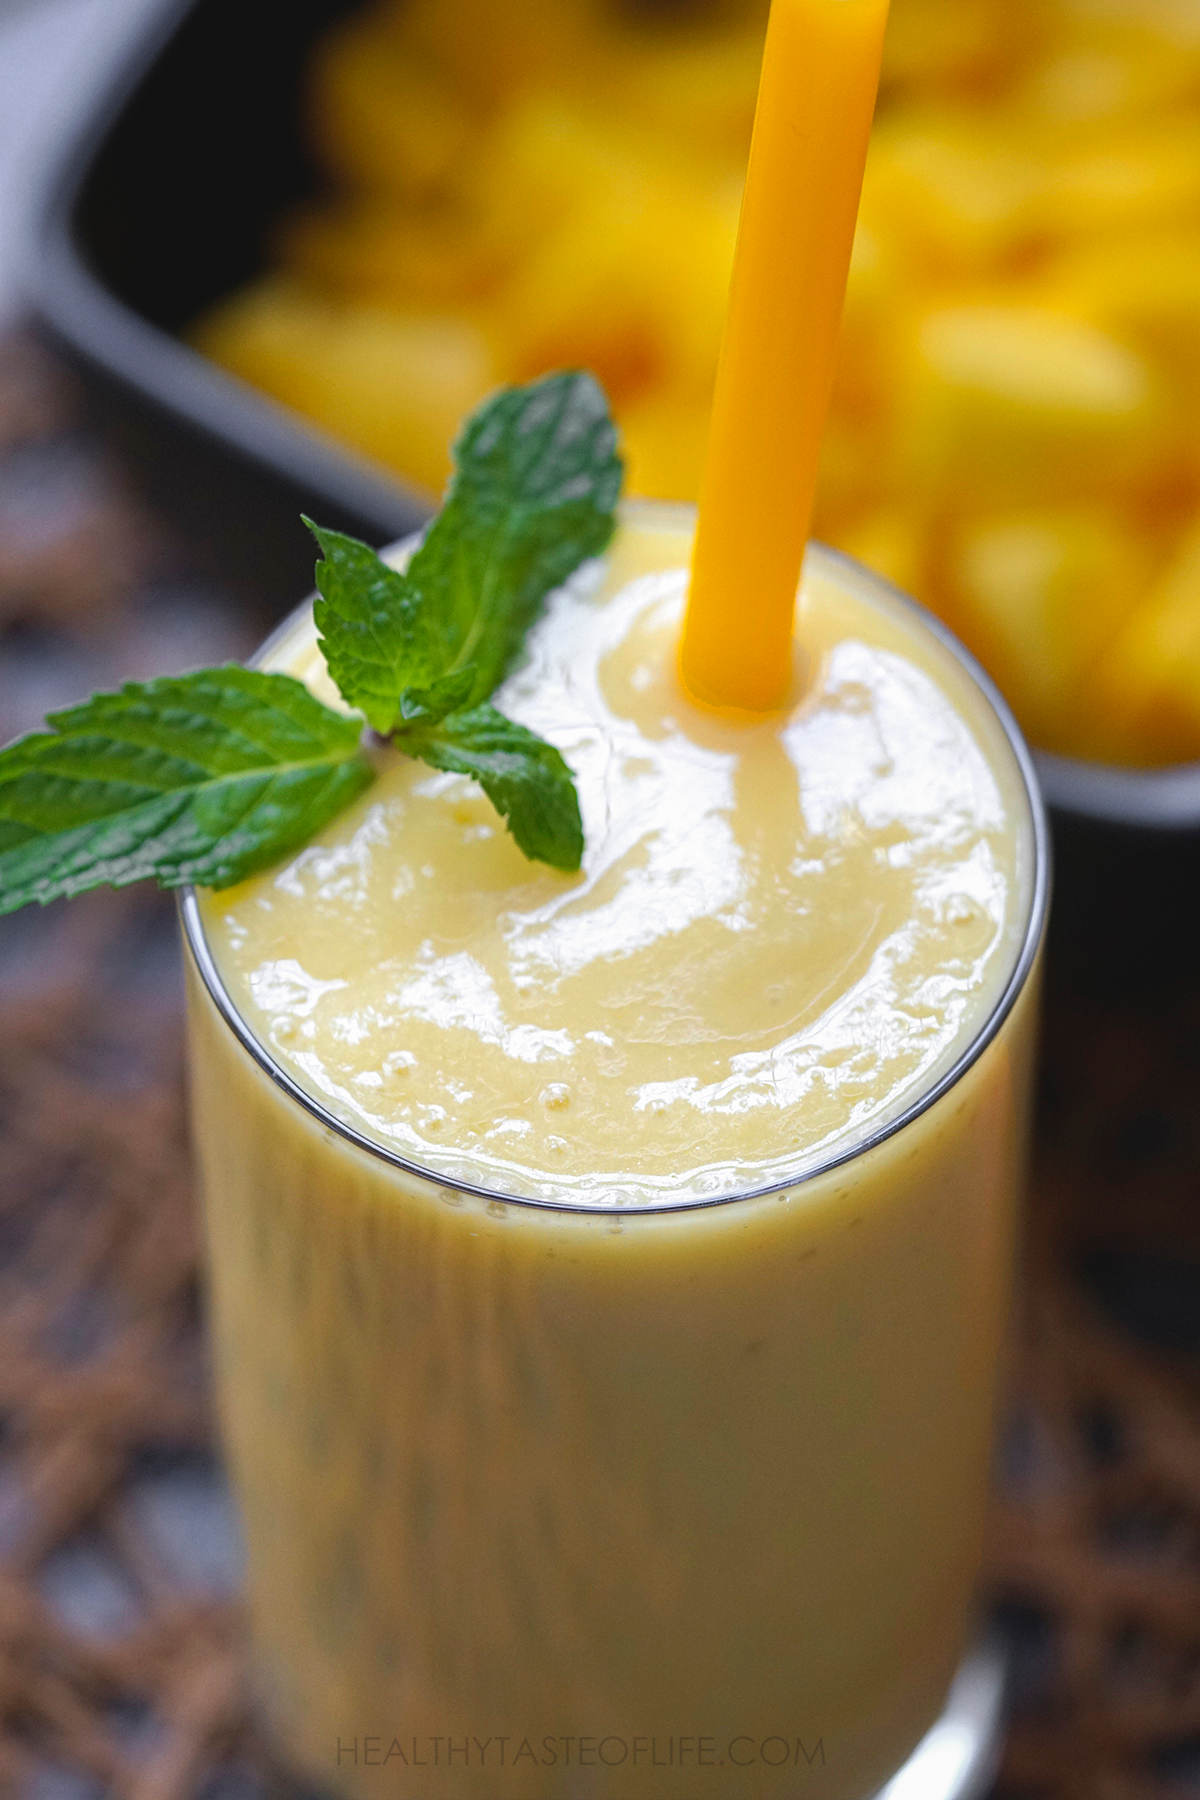 Mango pineapple smoothie close up shot.